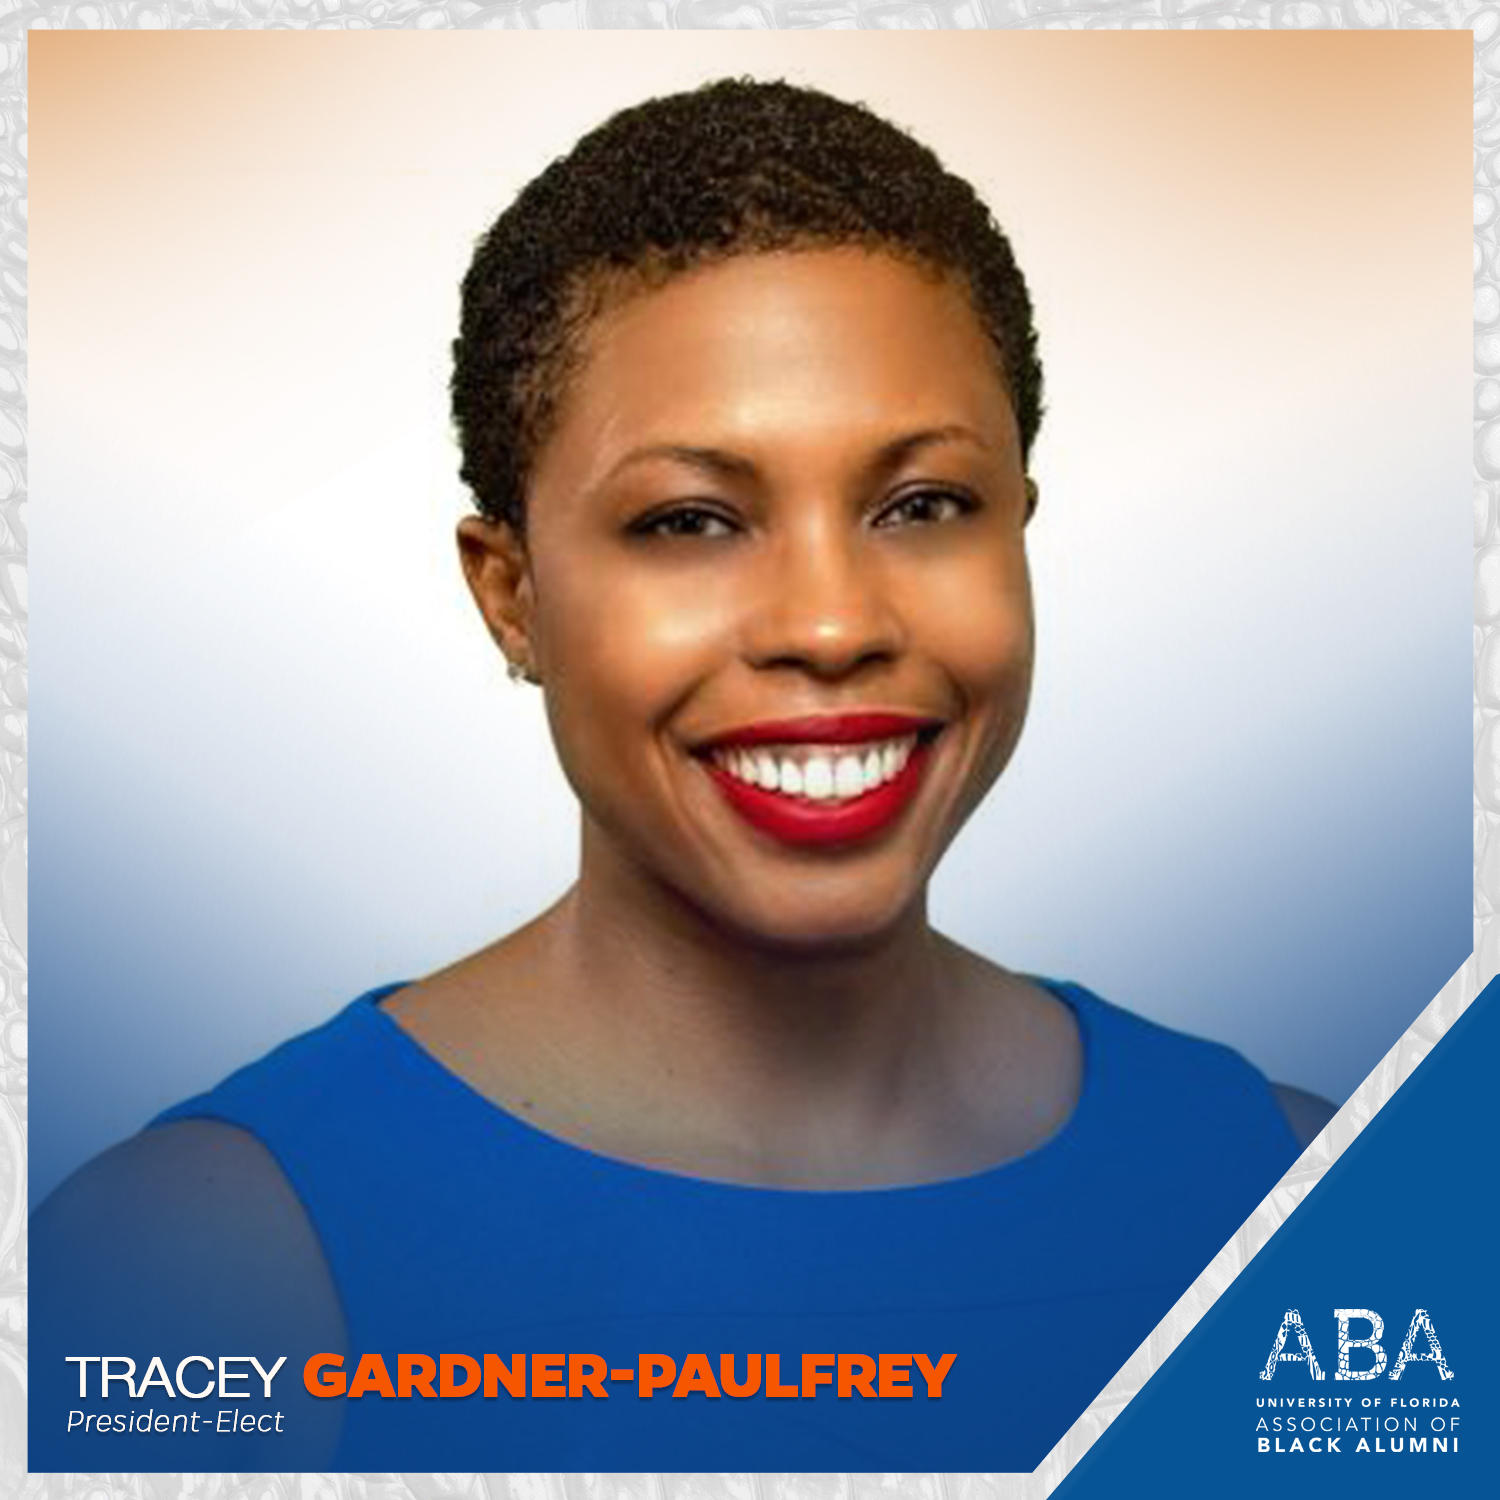 Tracey Gardner Paulfrey